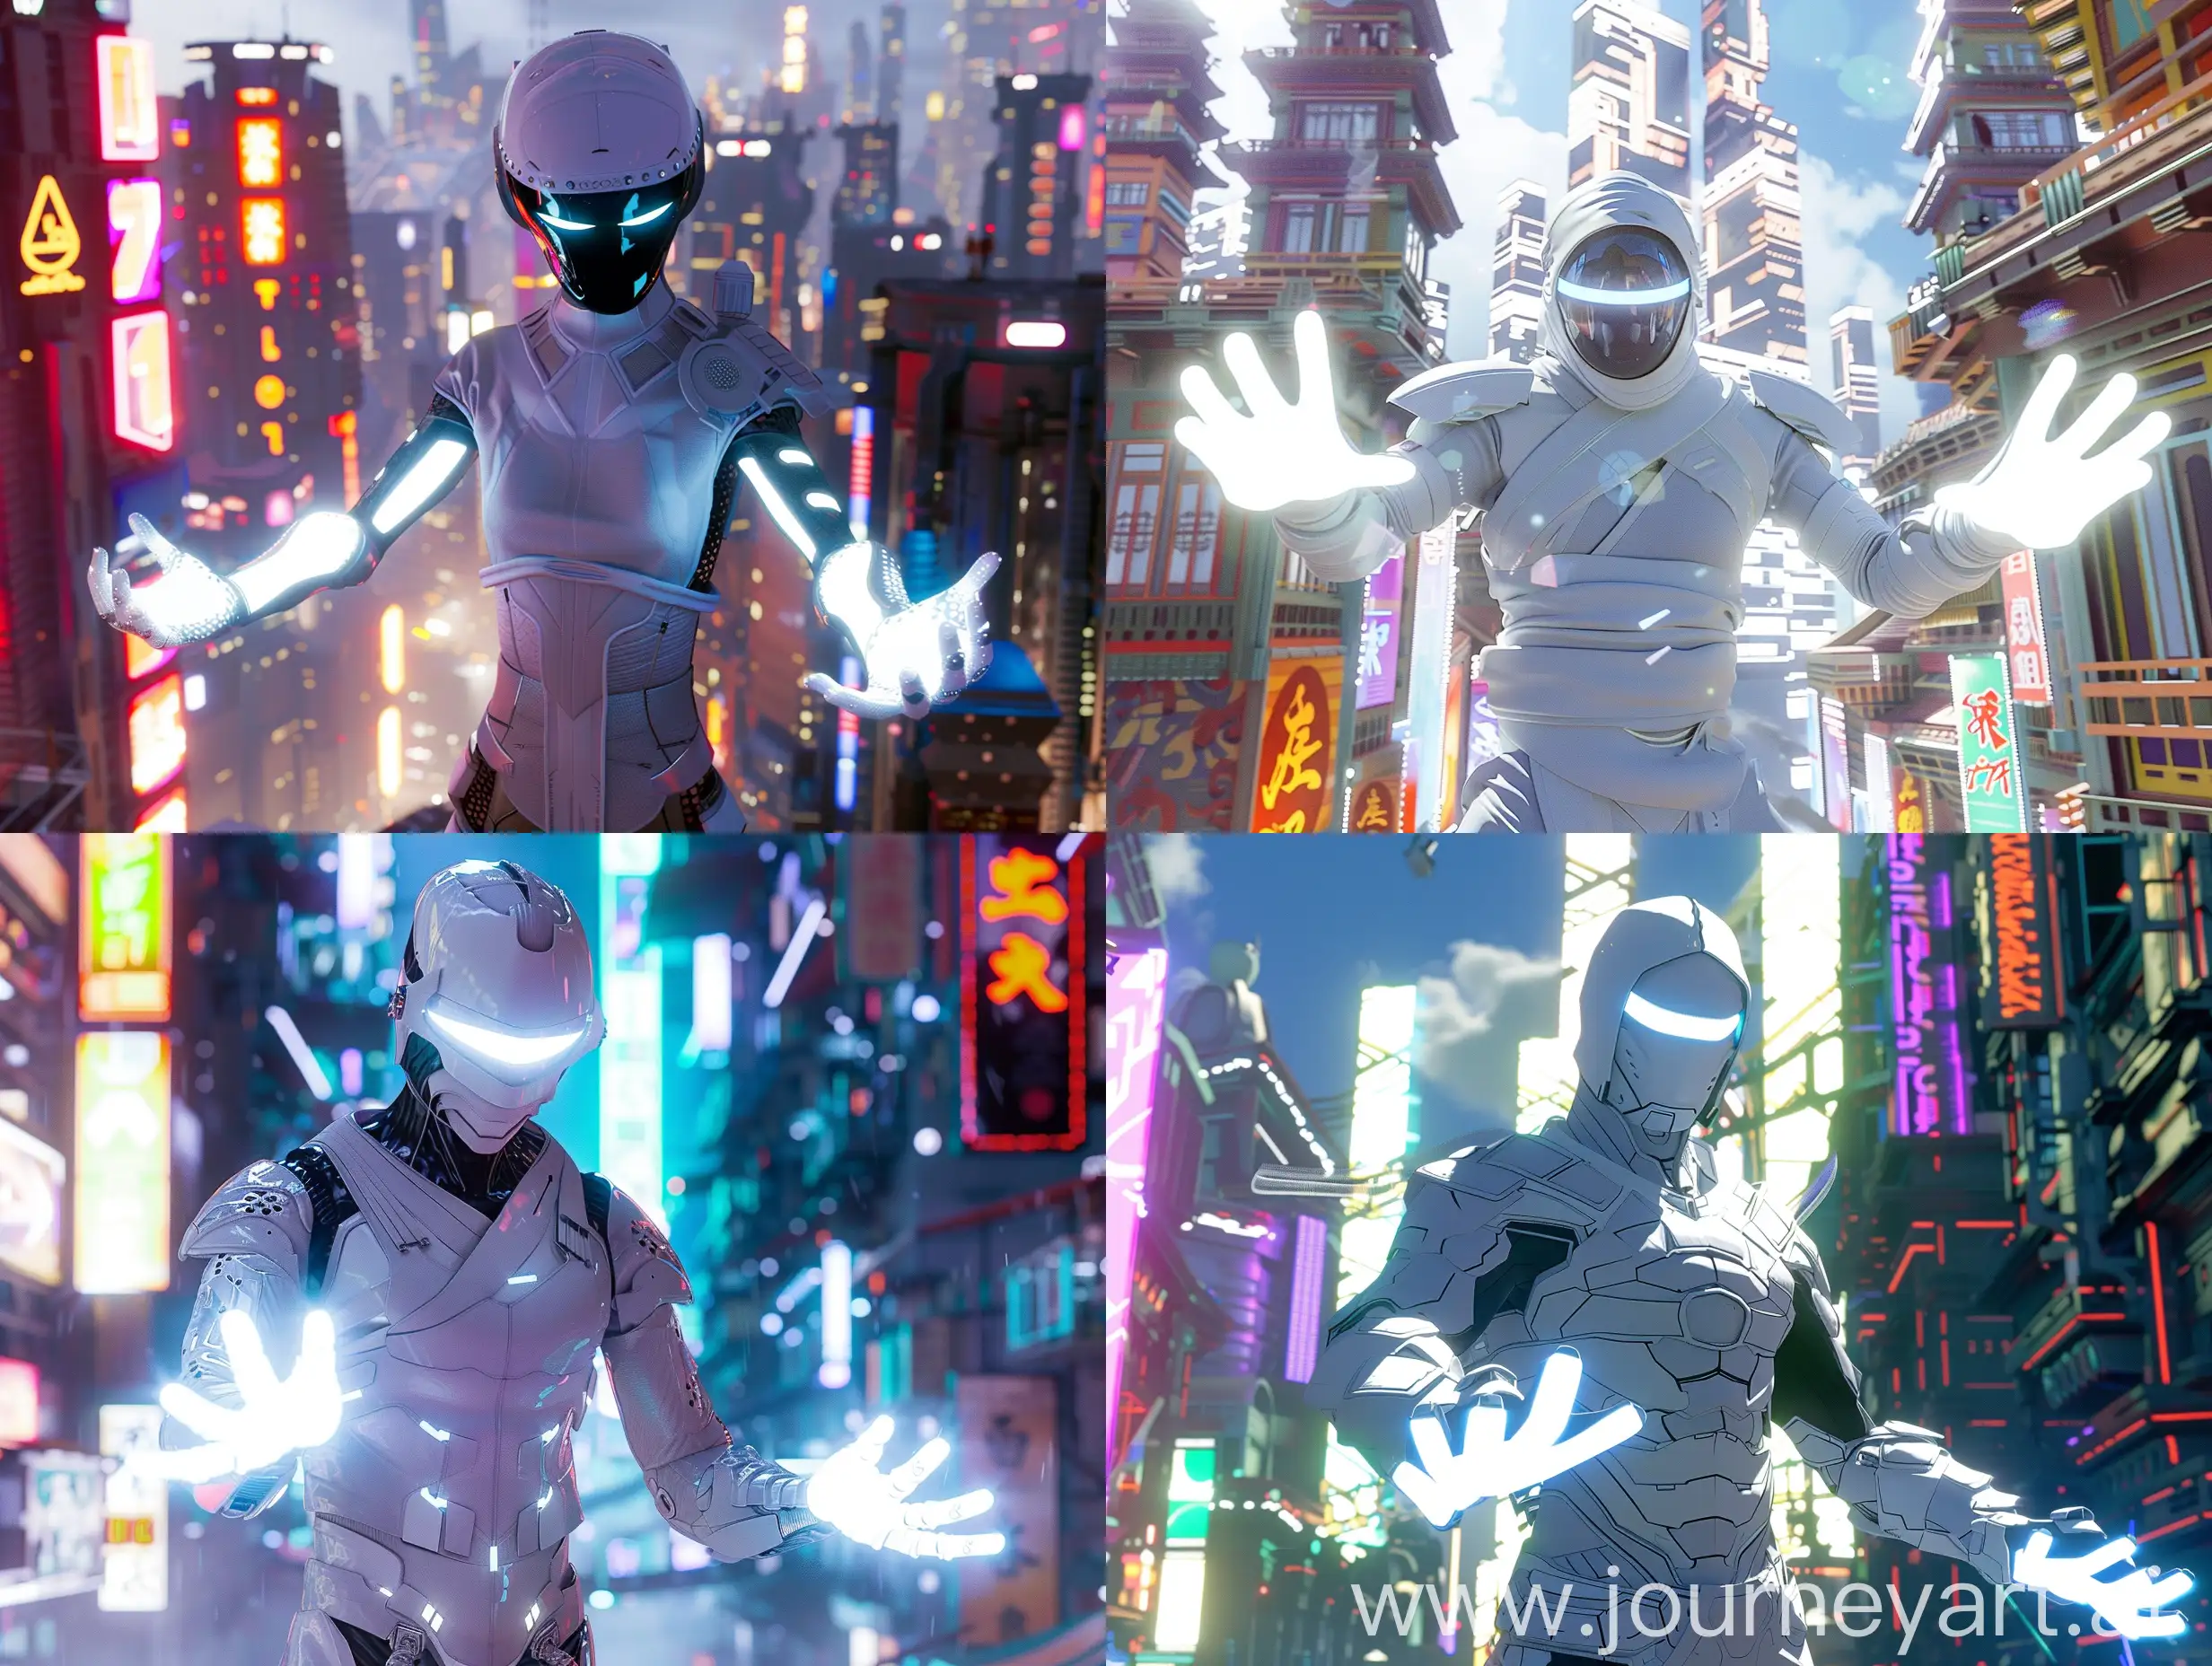 Futuristic-Cityscape-with-White-Ninja-Robot-in-Glowing-Costume